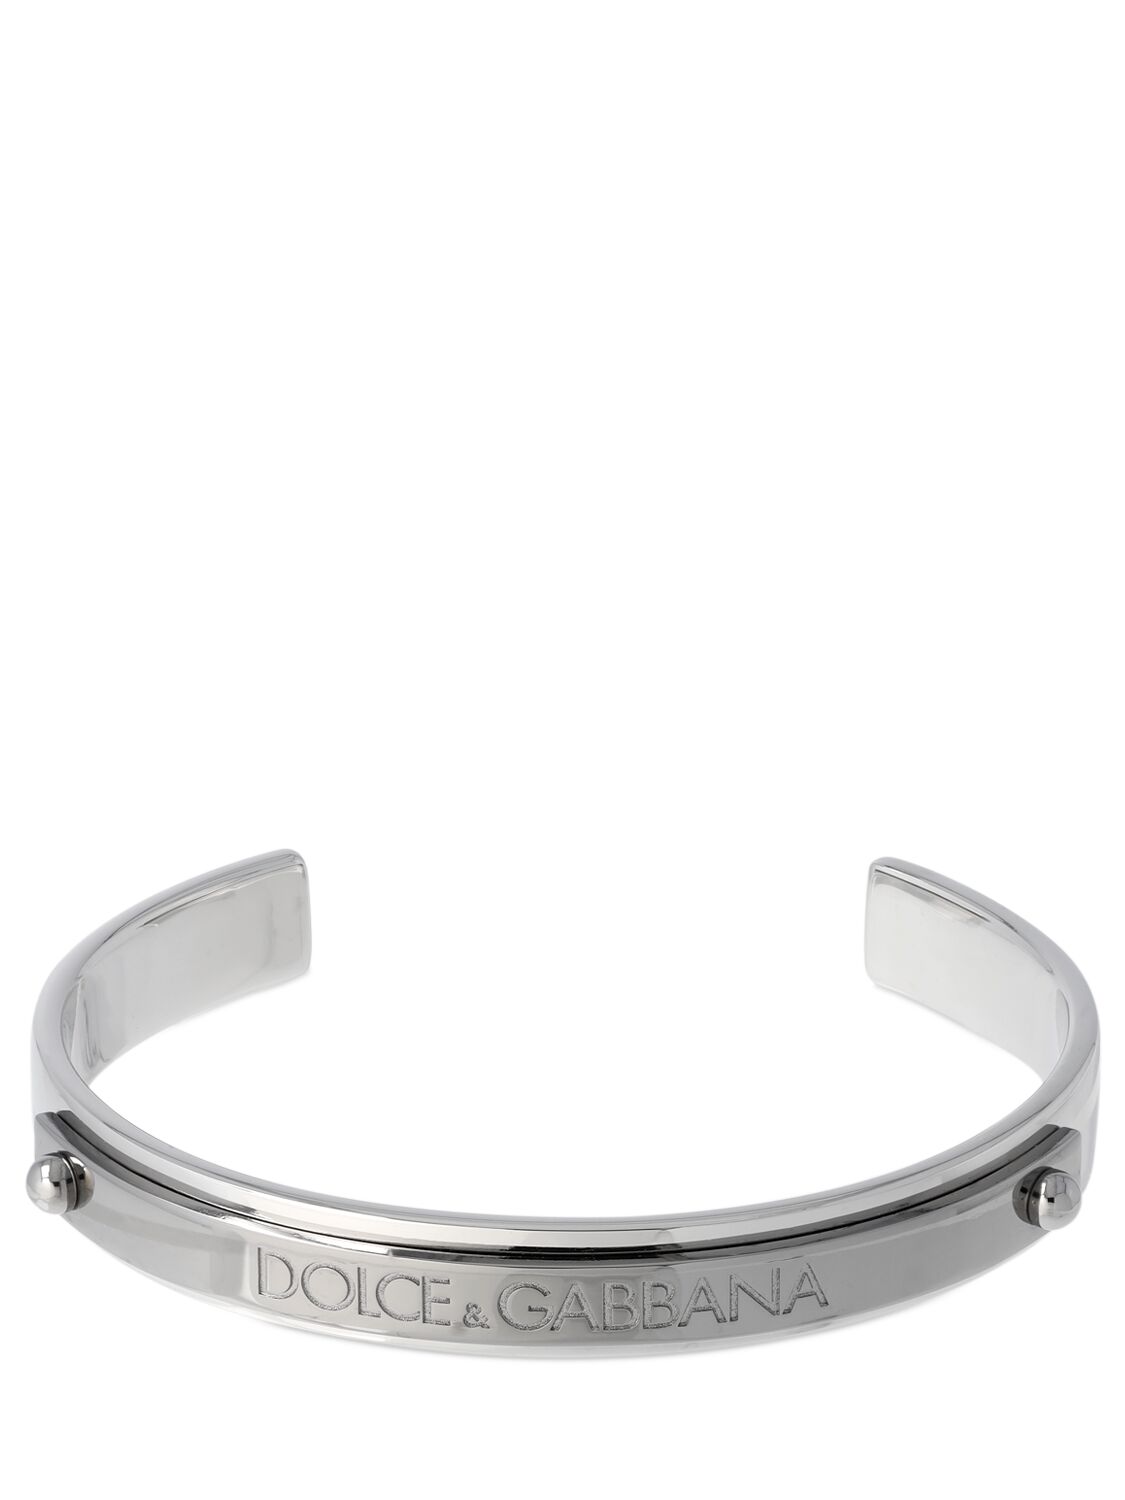 Dolce & Gabbana Dg Logo Cuff Bracelet In Silver